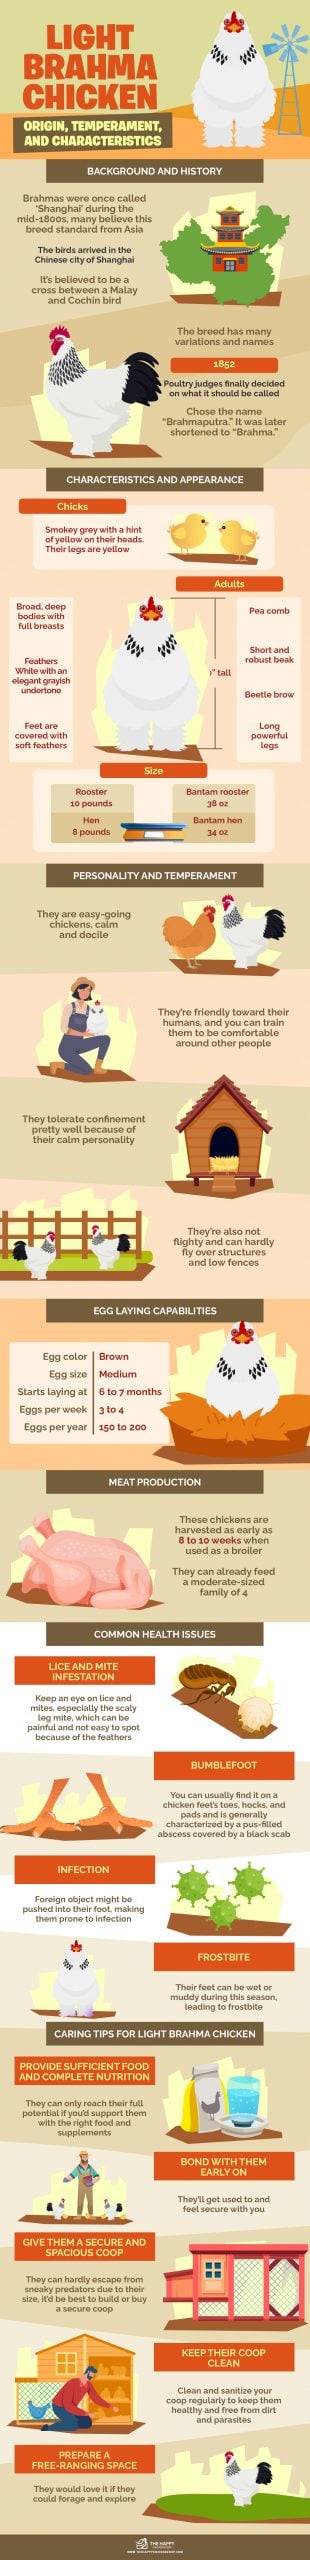 Light Brahma Chicken Origin, Temperament, and Characteristics